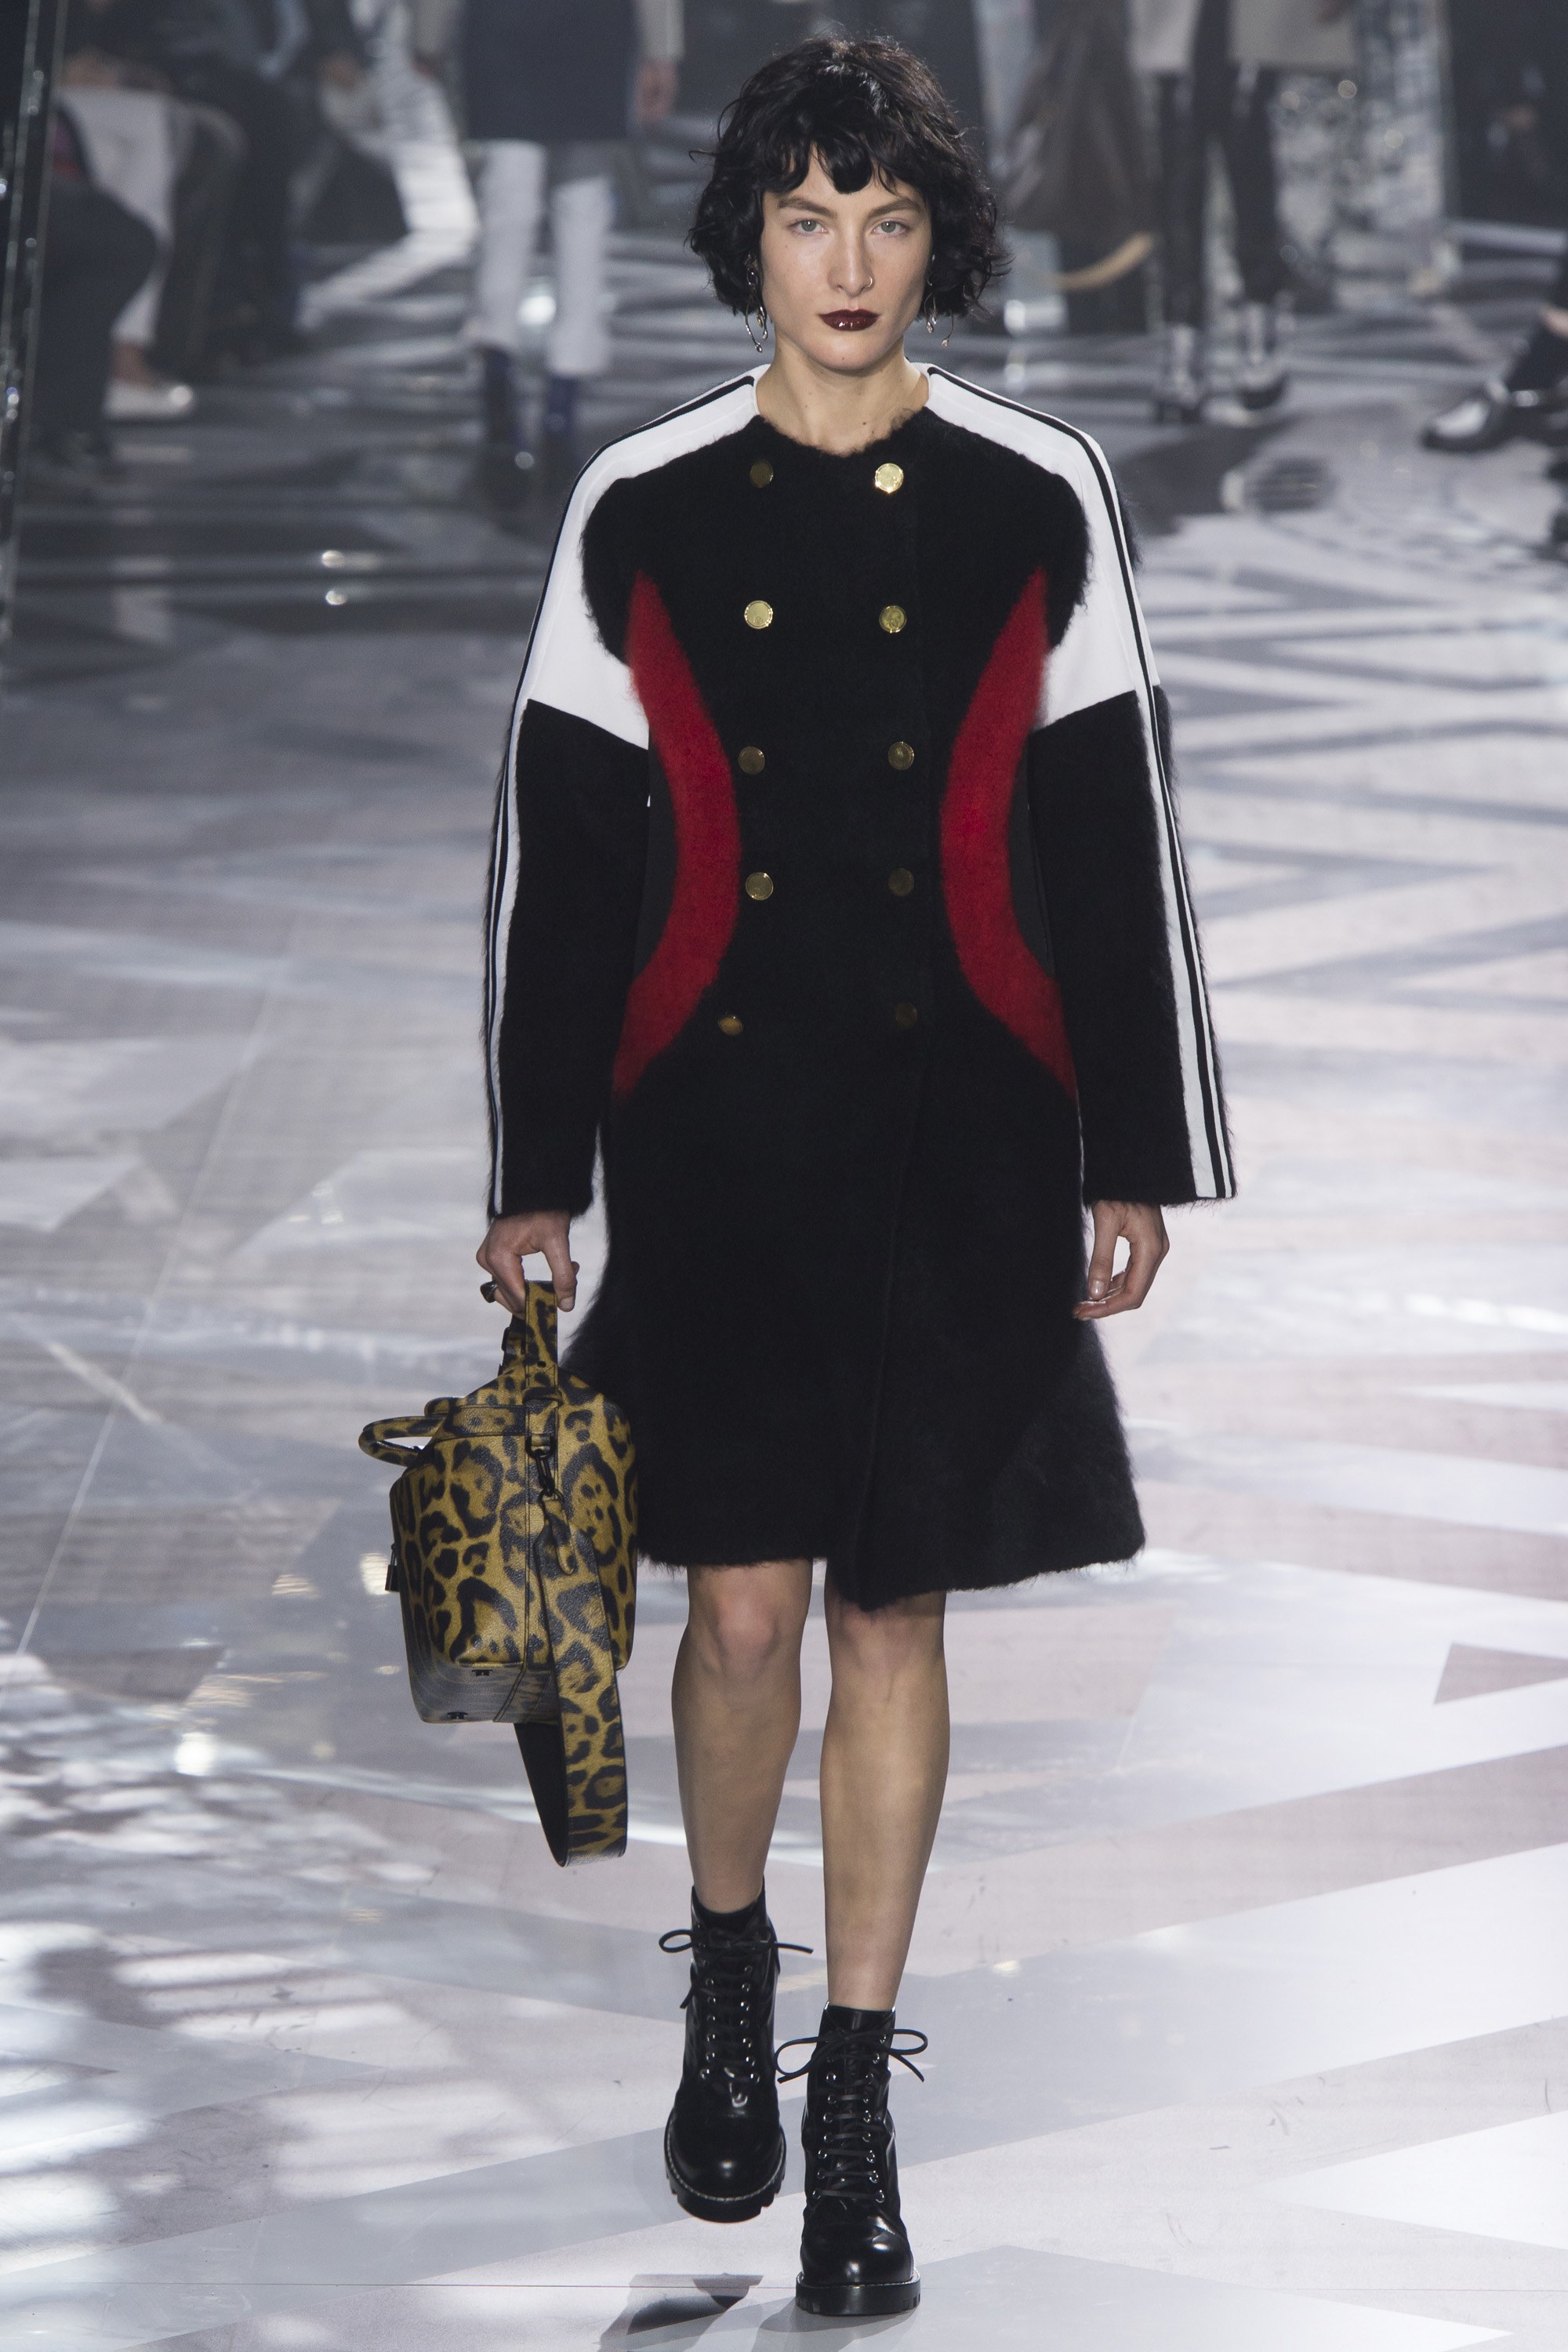 Louis Vuitton Mini Lin Croisette - PurseBlog